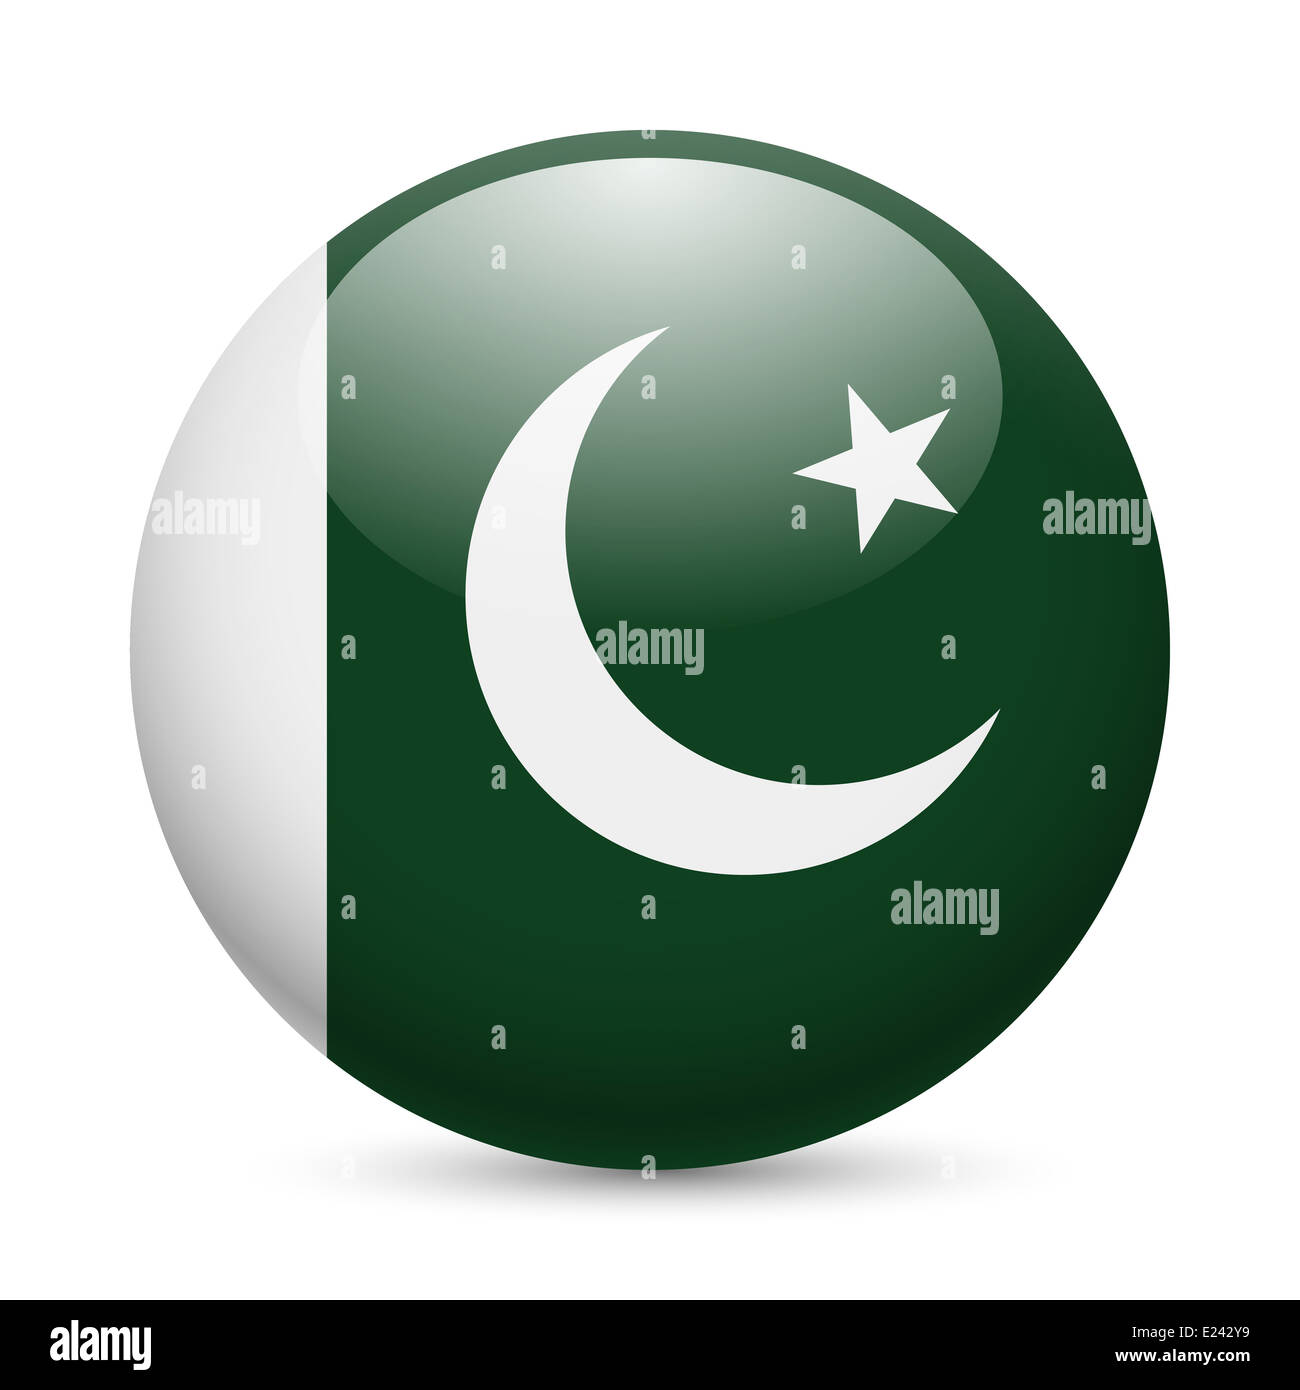 Flag of Pakistan as round glossy icon. Button with Pakistani flag Stock Photo